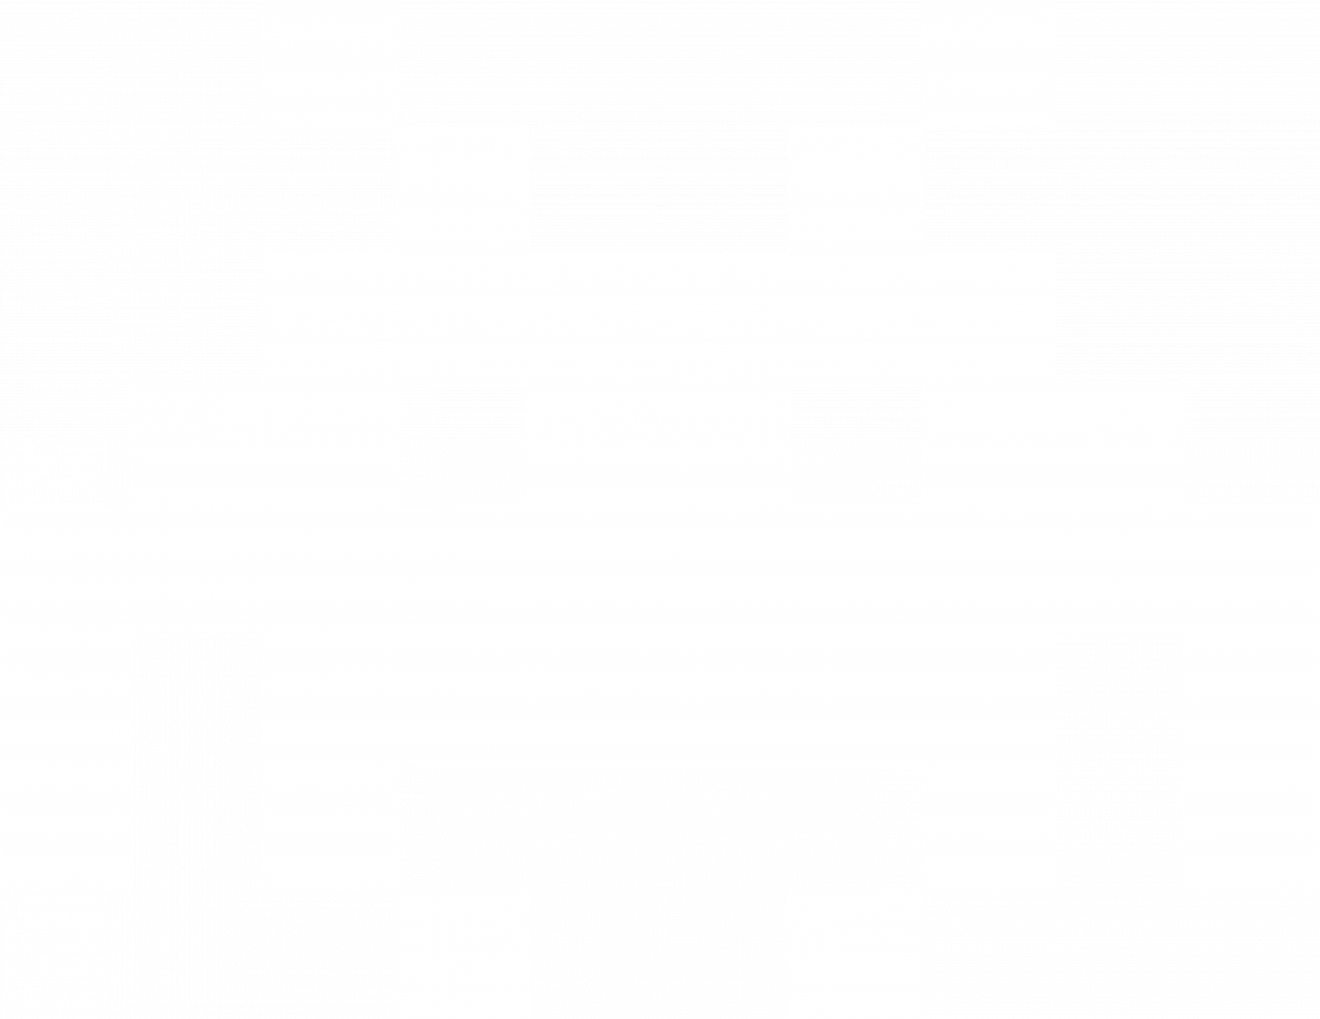 pixel 2